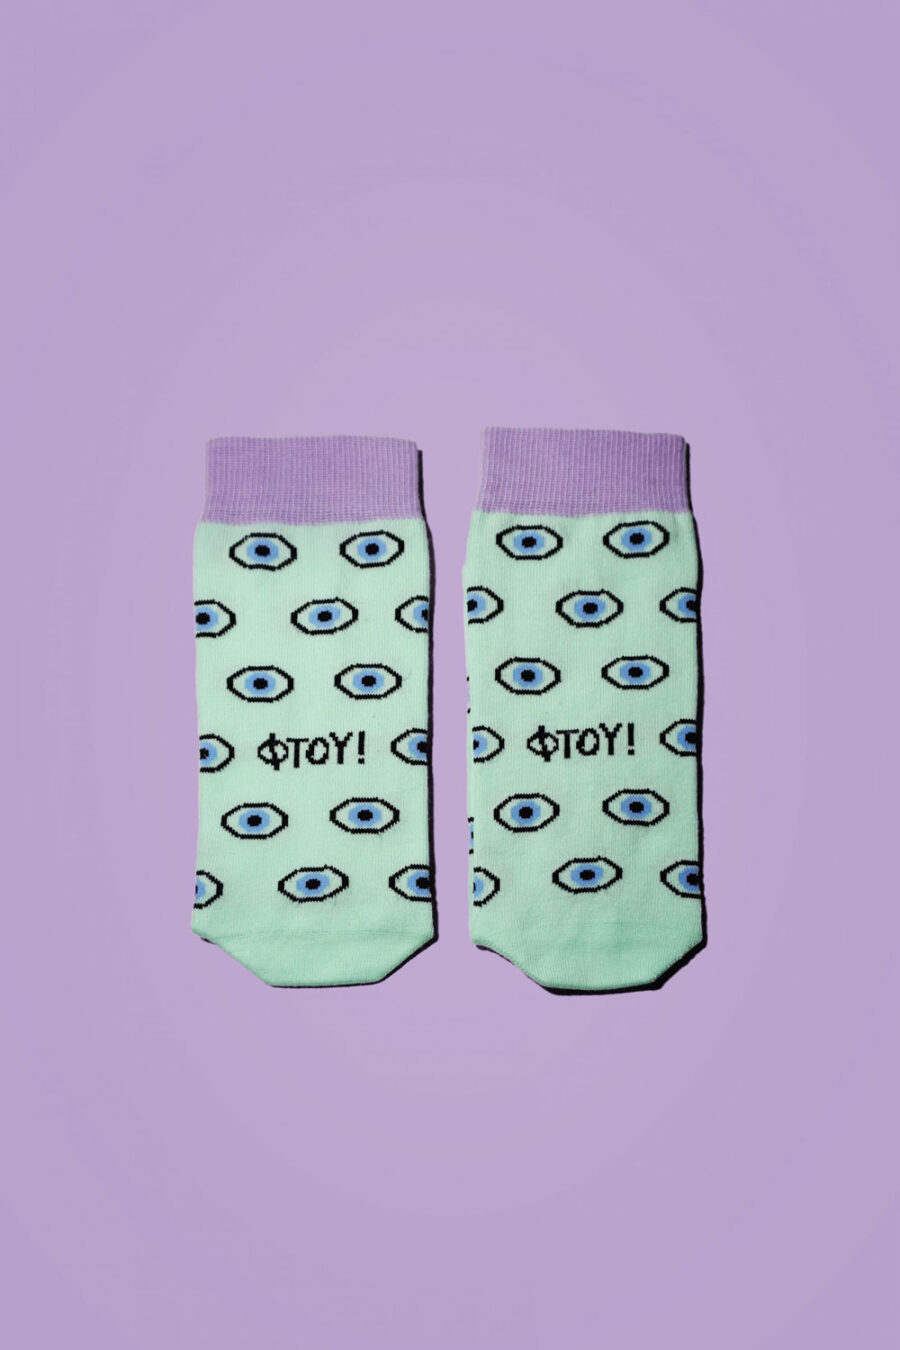 -  - Eyes socks in aqua Pantone 0921 C - 15